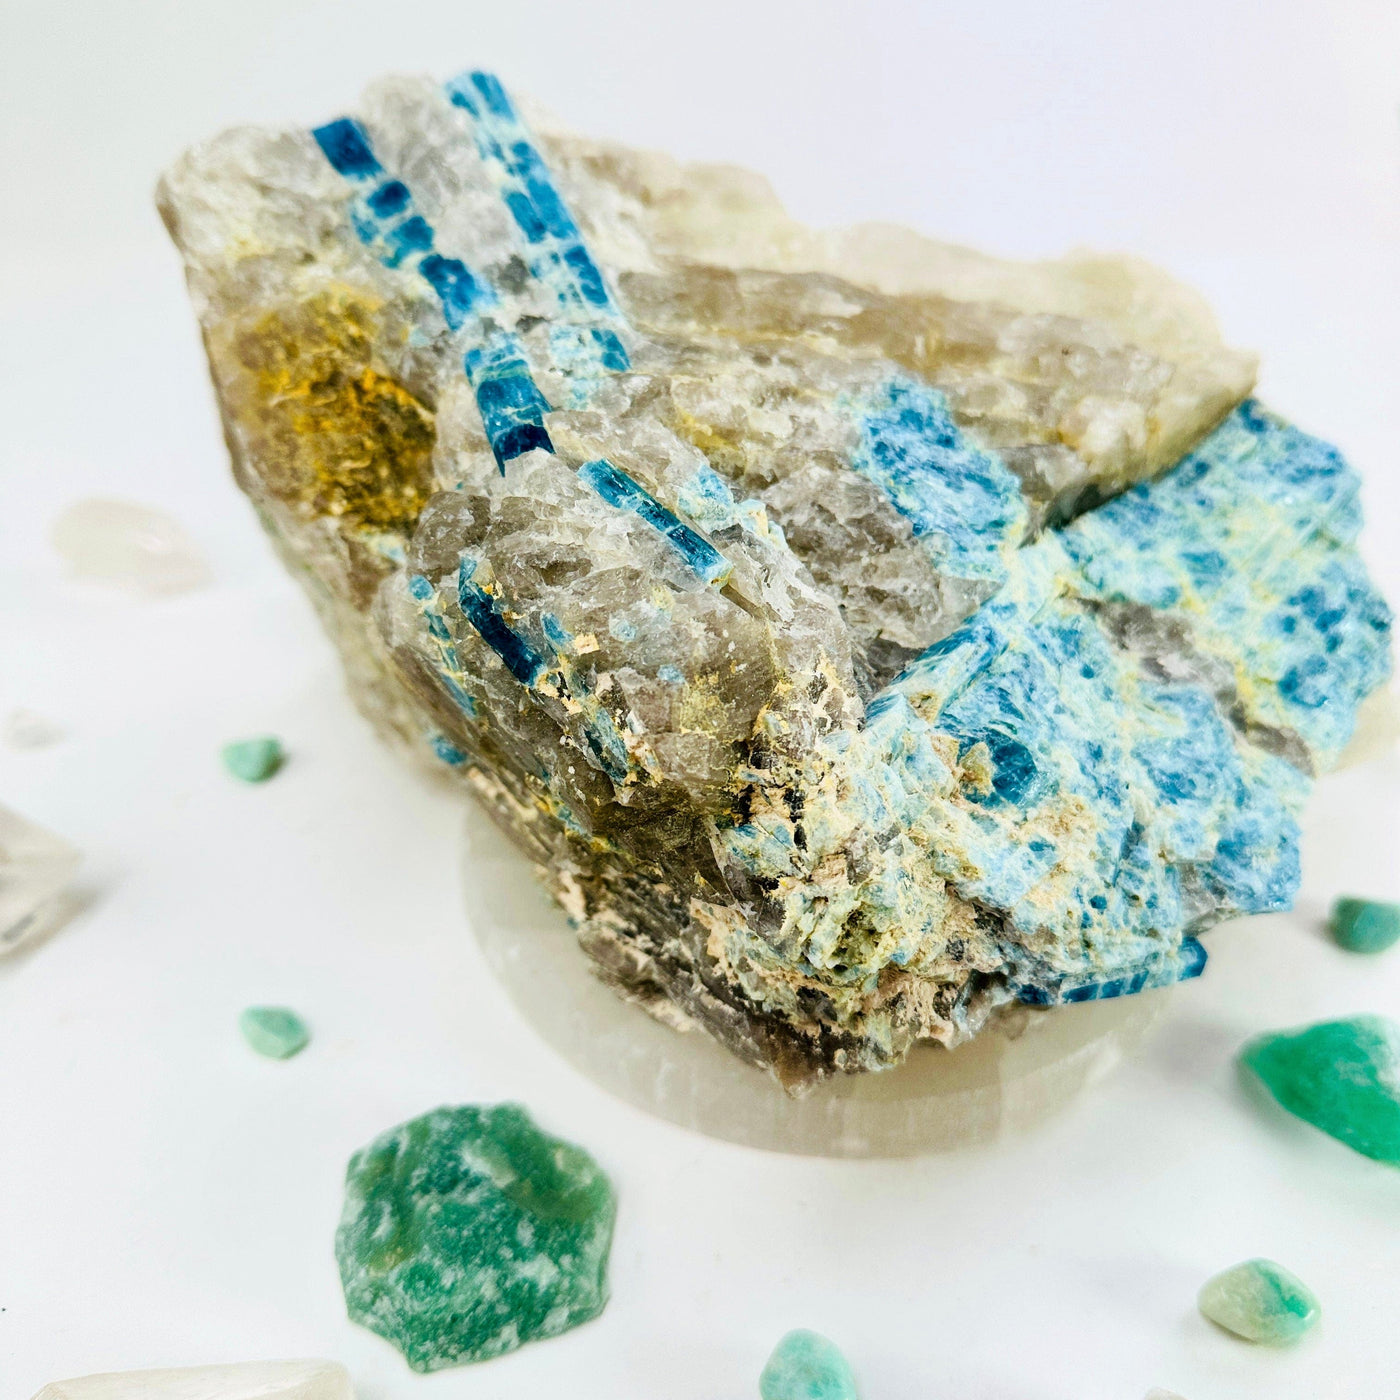 Aquamarine in matrix - large natural rough stone close up to show detail